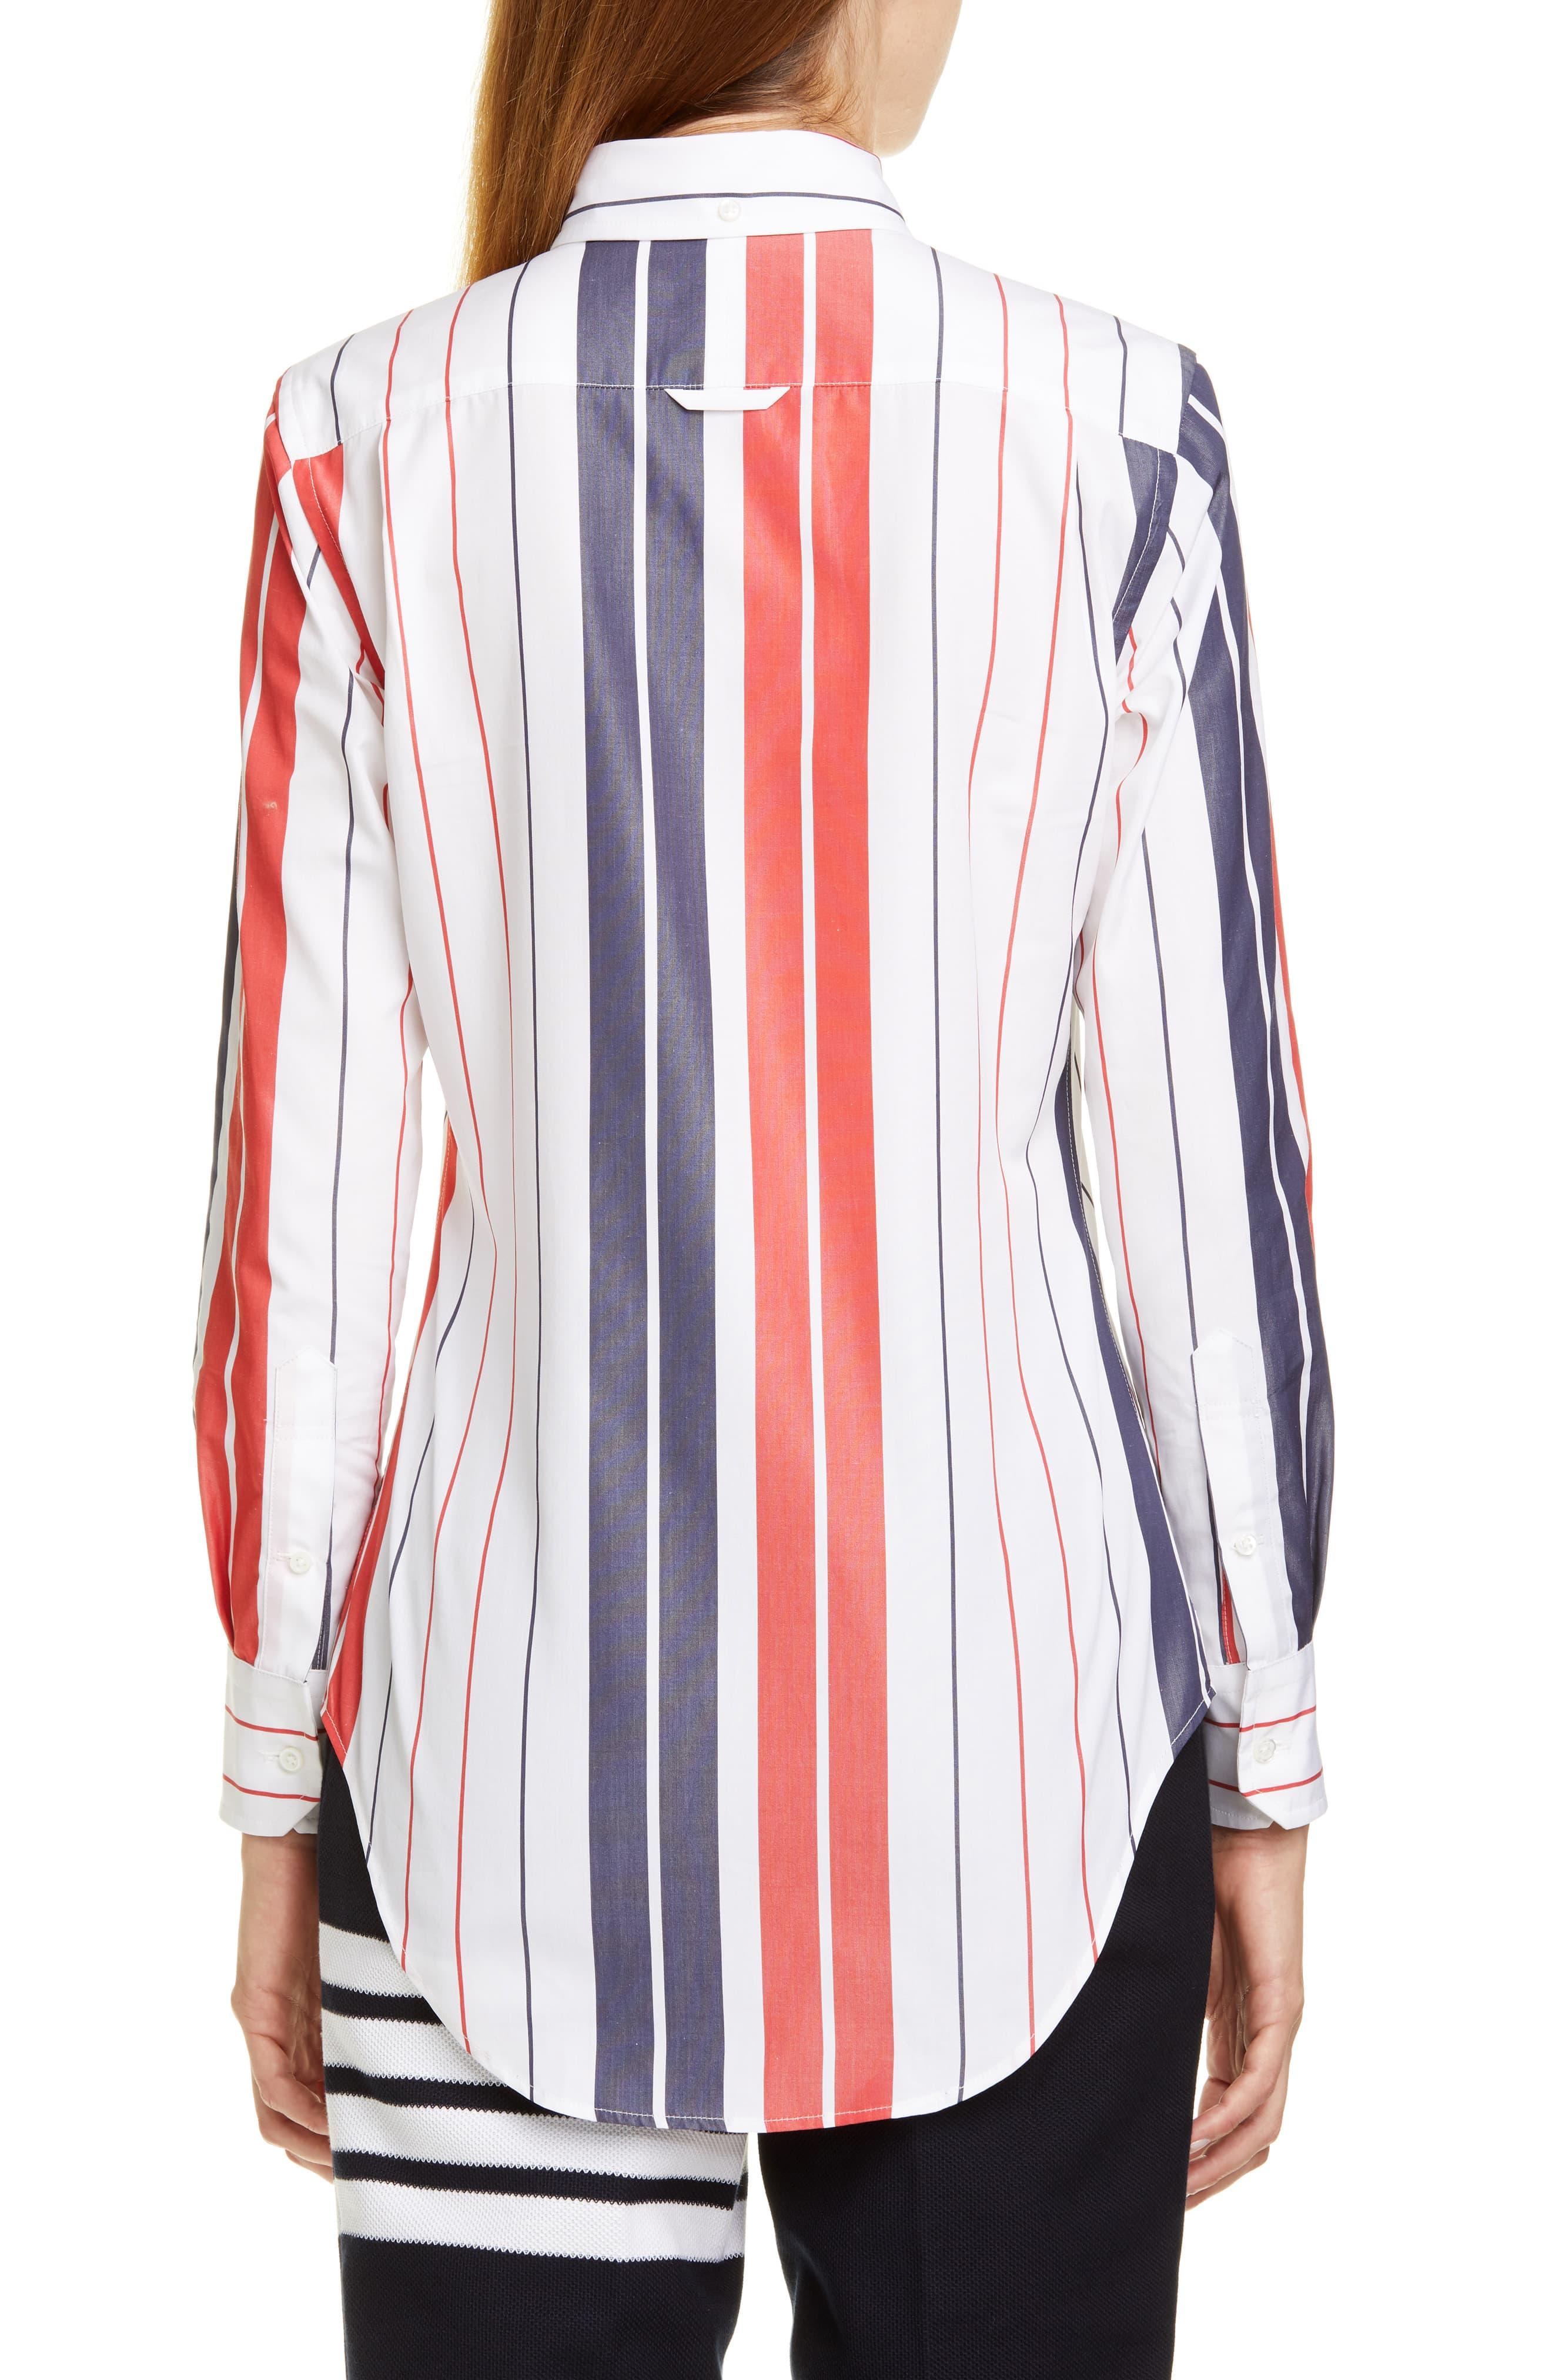 Thom Browne Stripe Cotton Shirt in White - Lyst